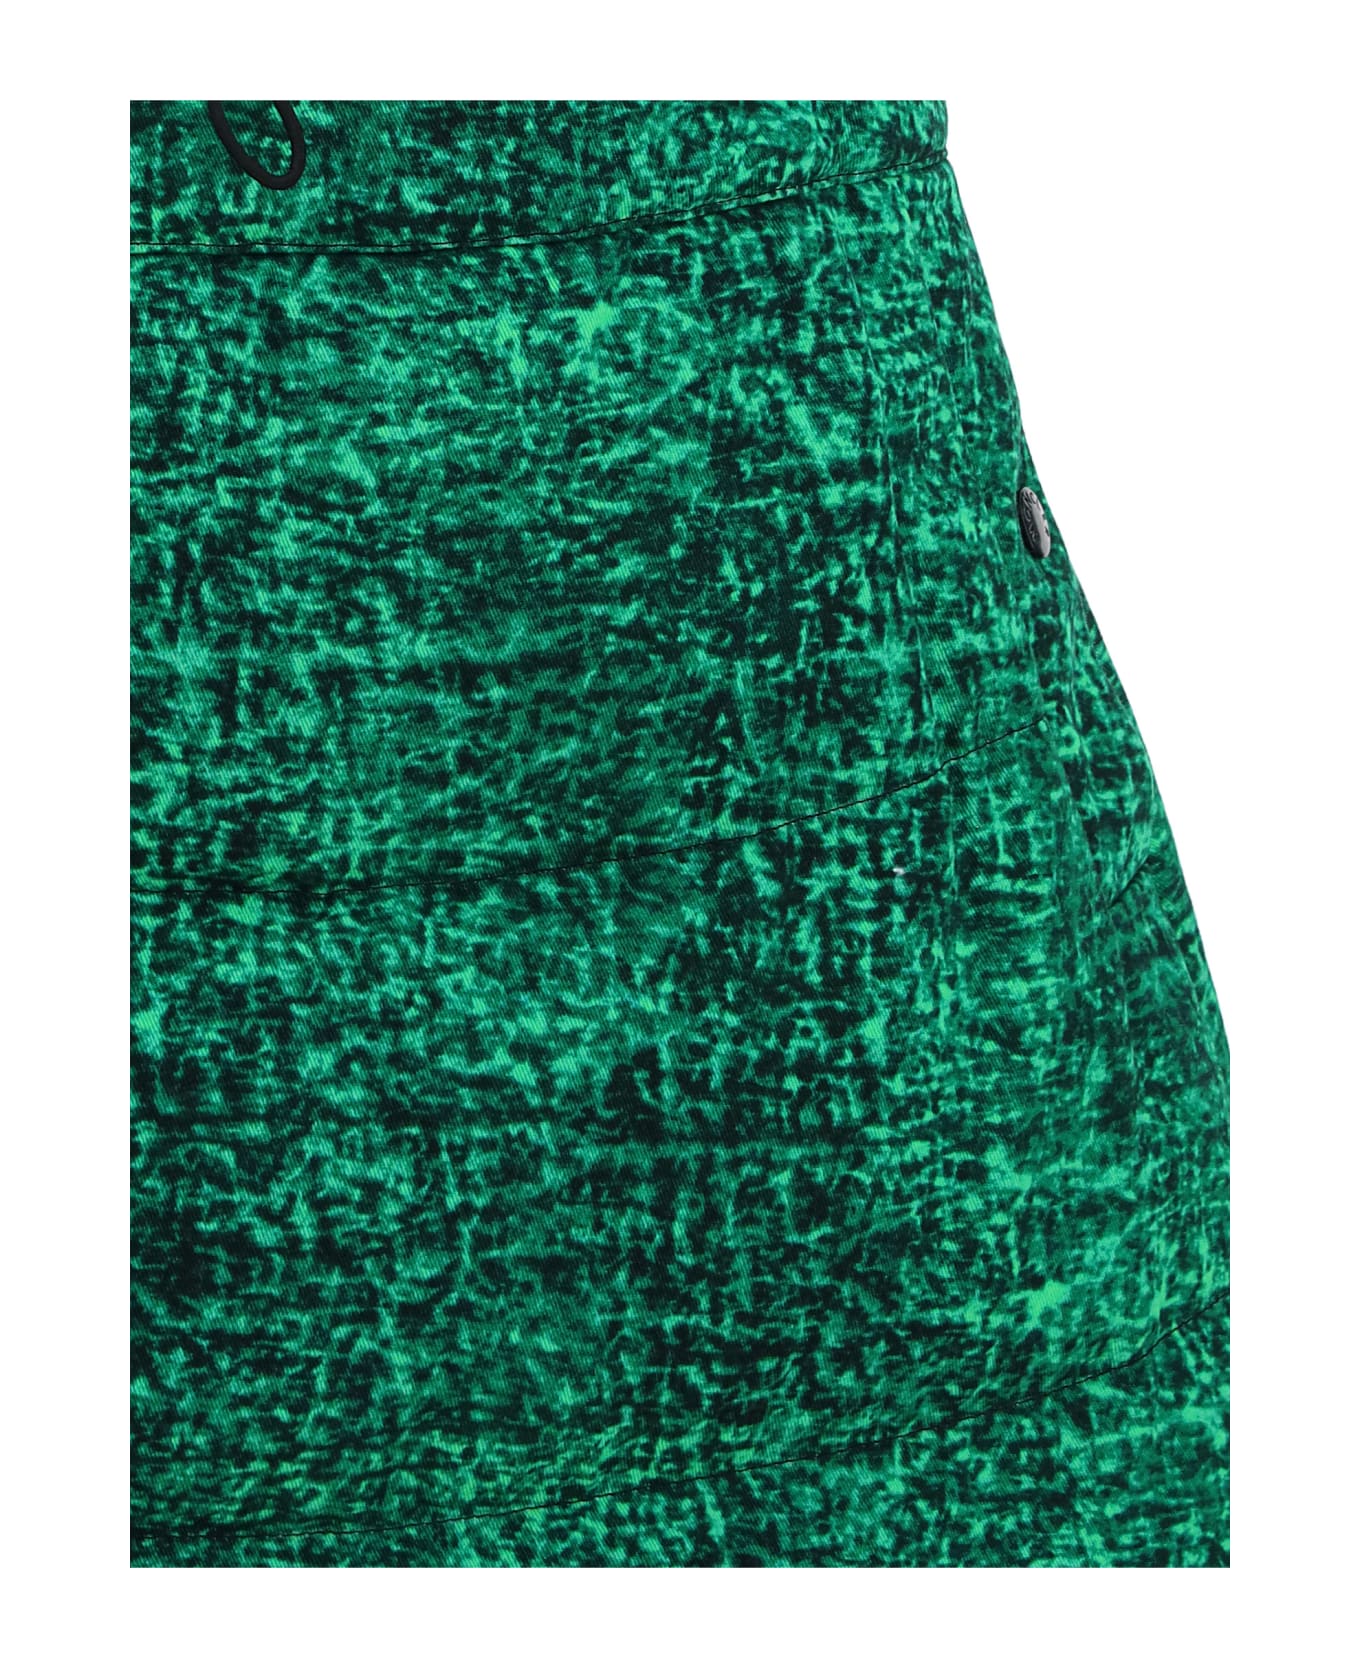 Moncler Skirt - Green